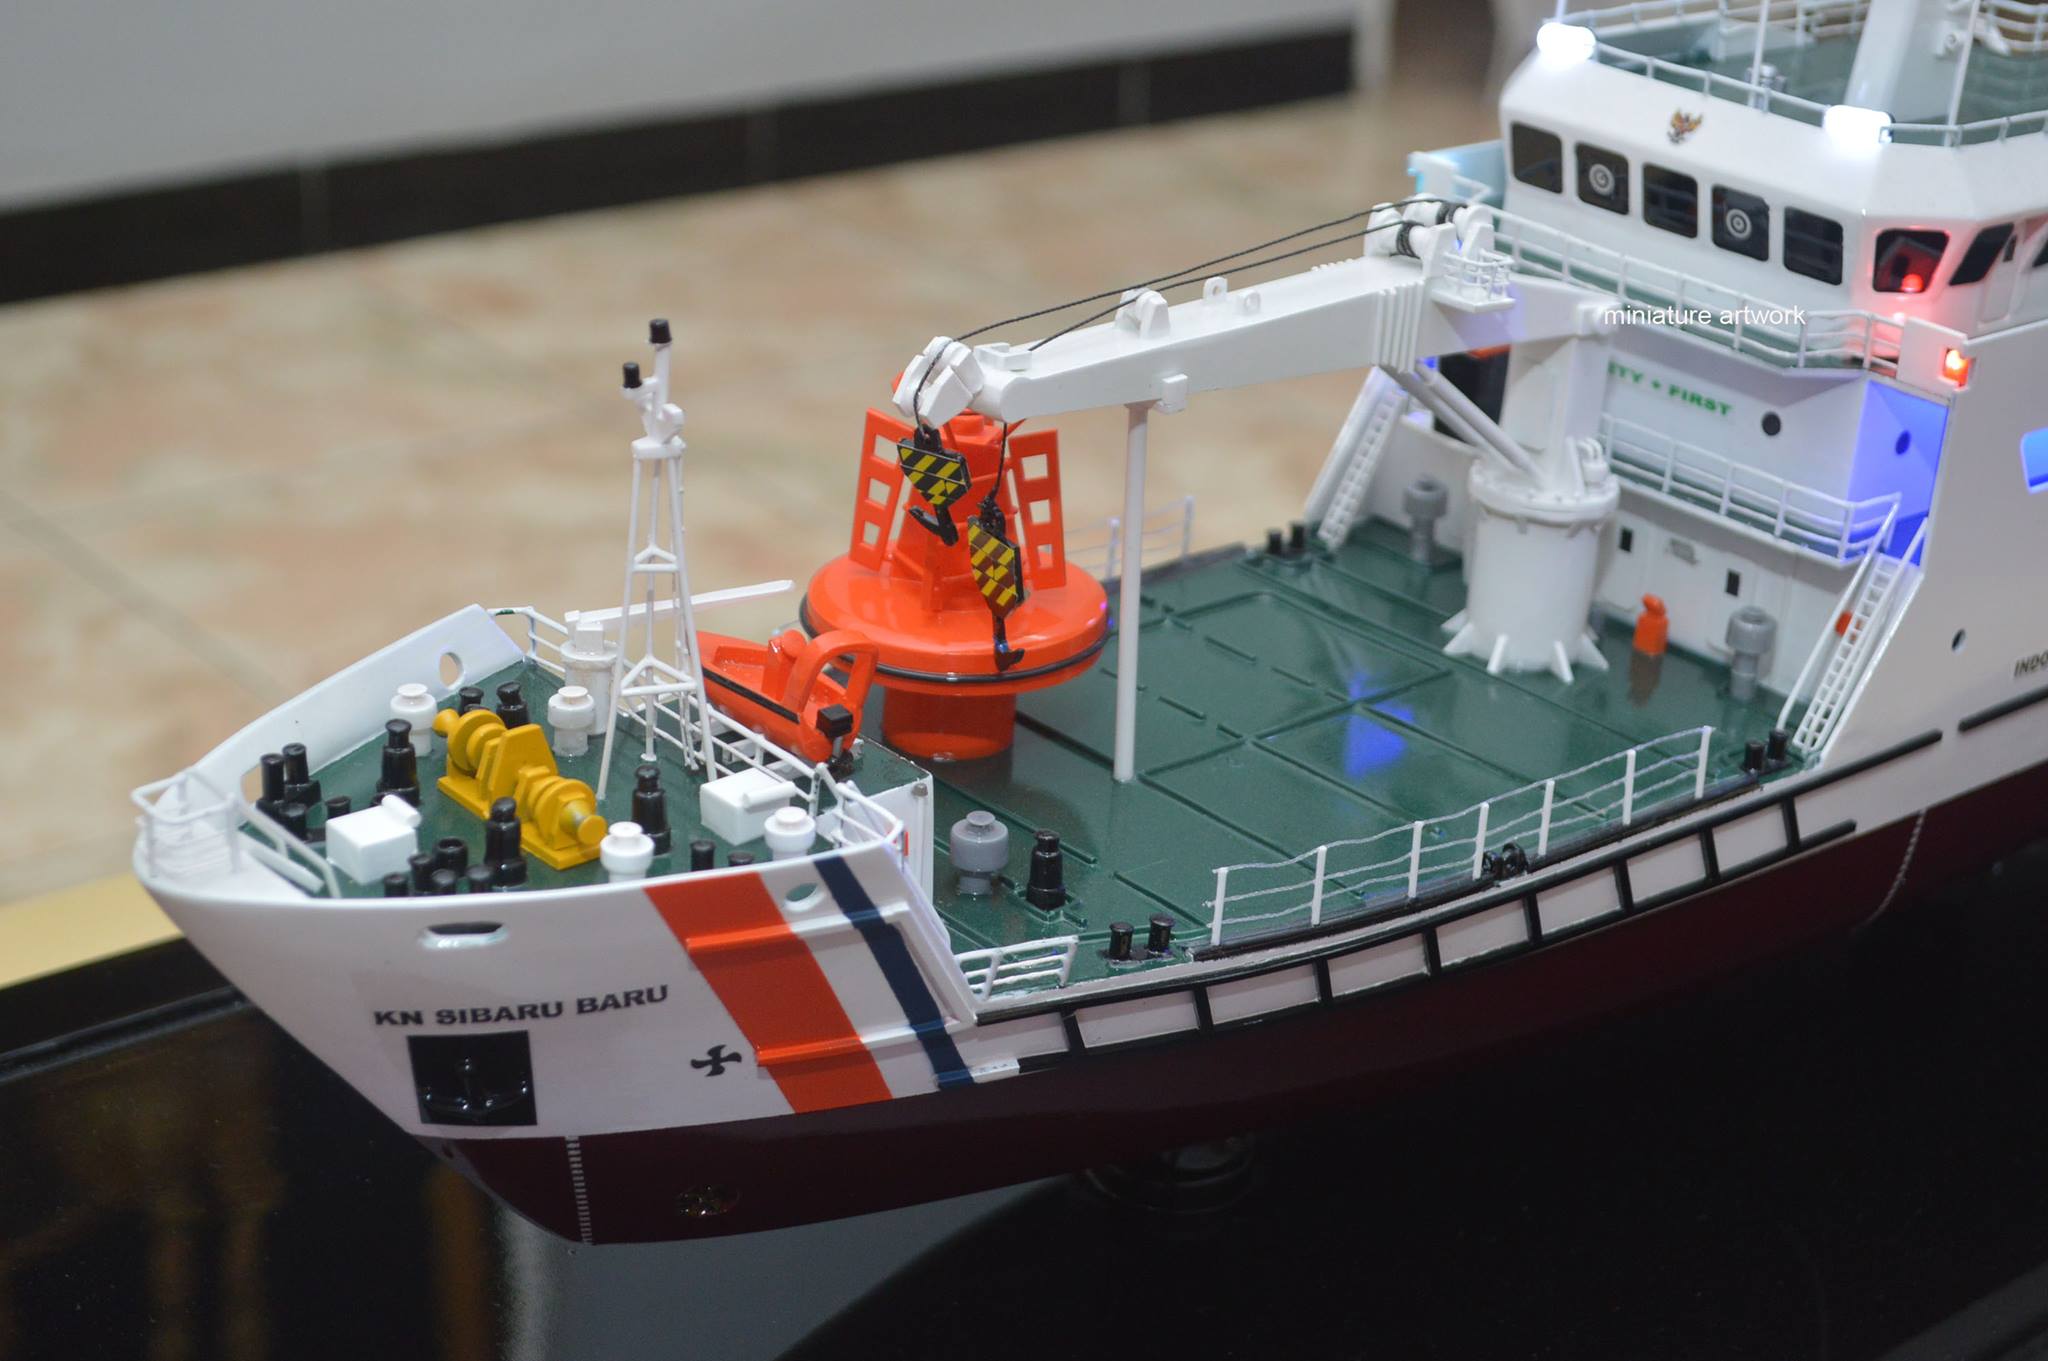 desain sketsa miniatur kapal kn sibaru baru navigation ship terbaik